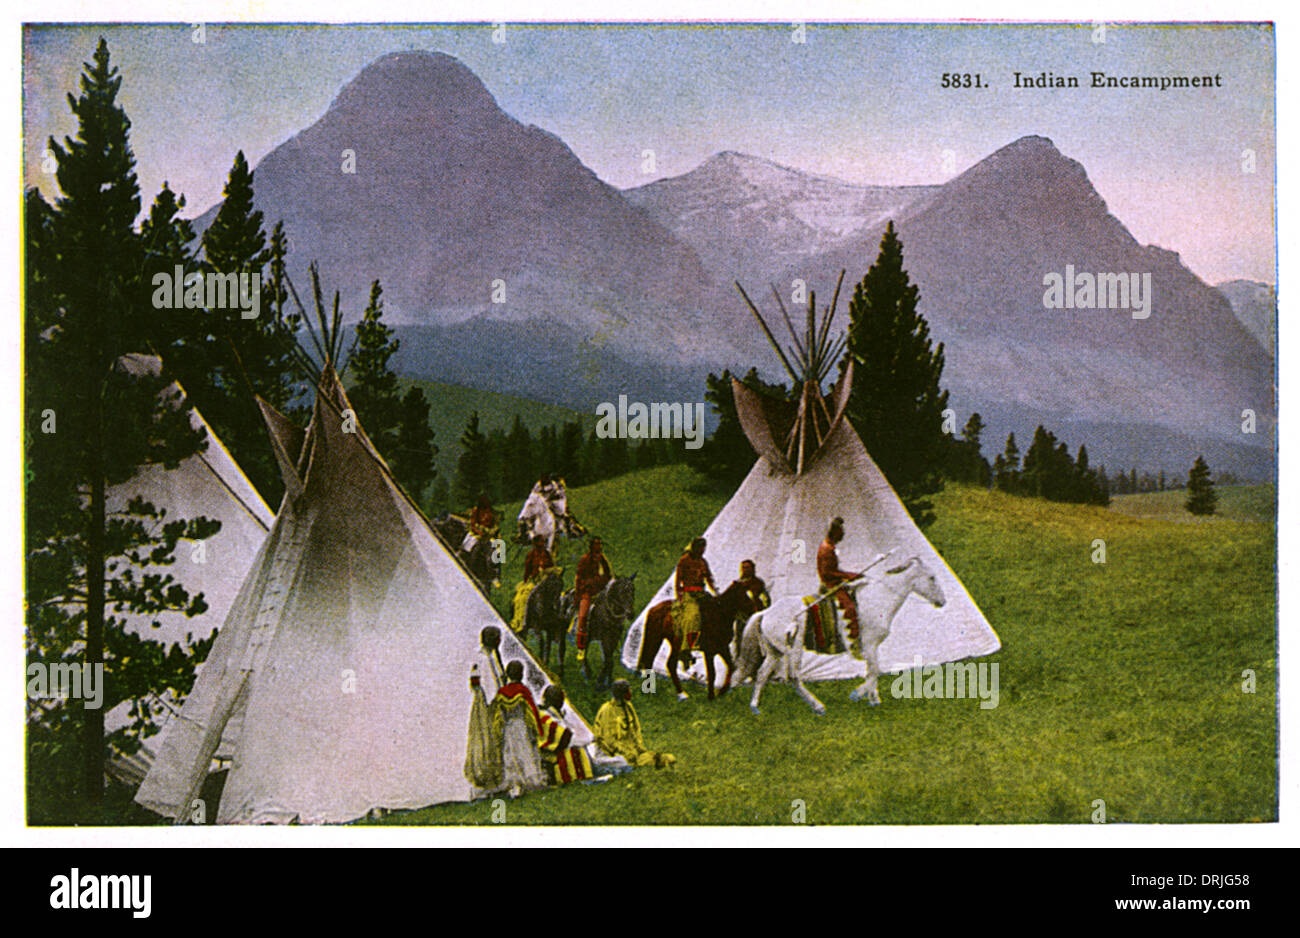 Native American Indian encampment Stock Photo